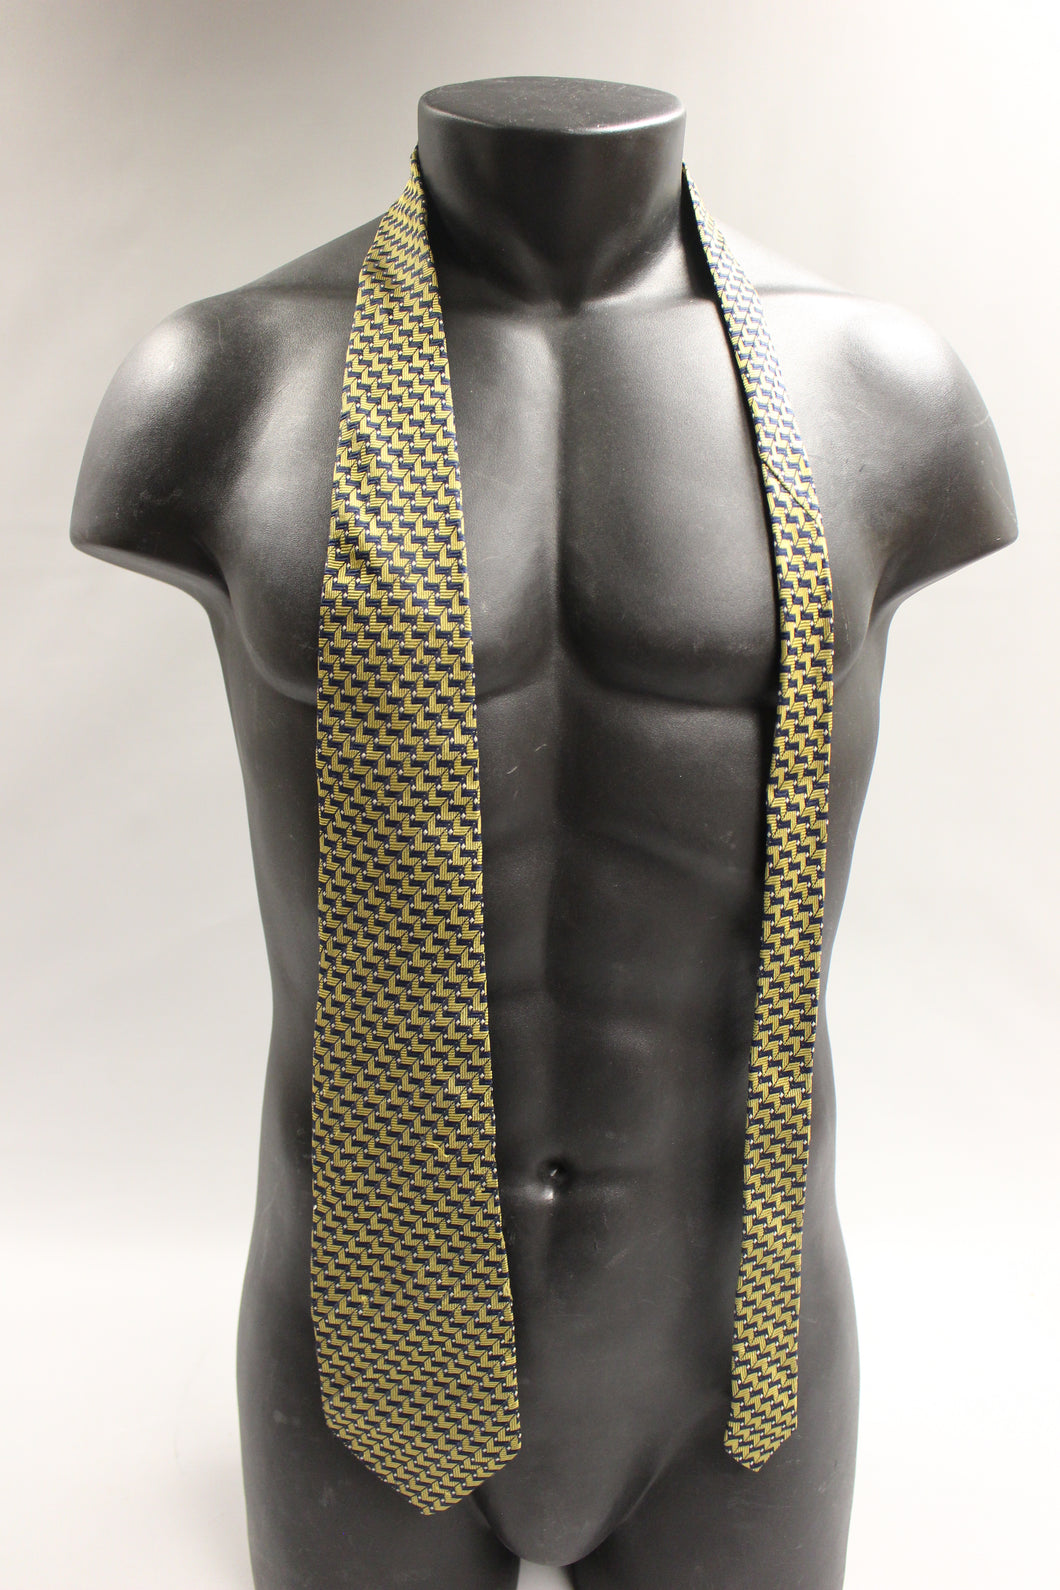 LA CRAVATTA DI Giober Silk Necktie Tie - Length 60